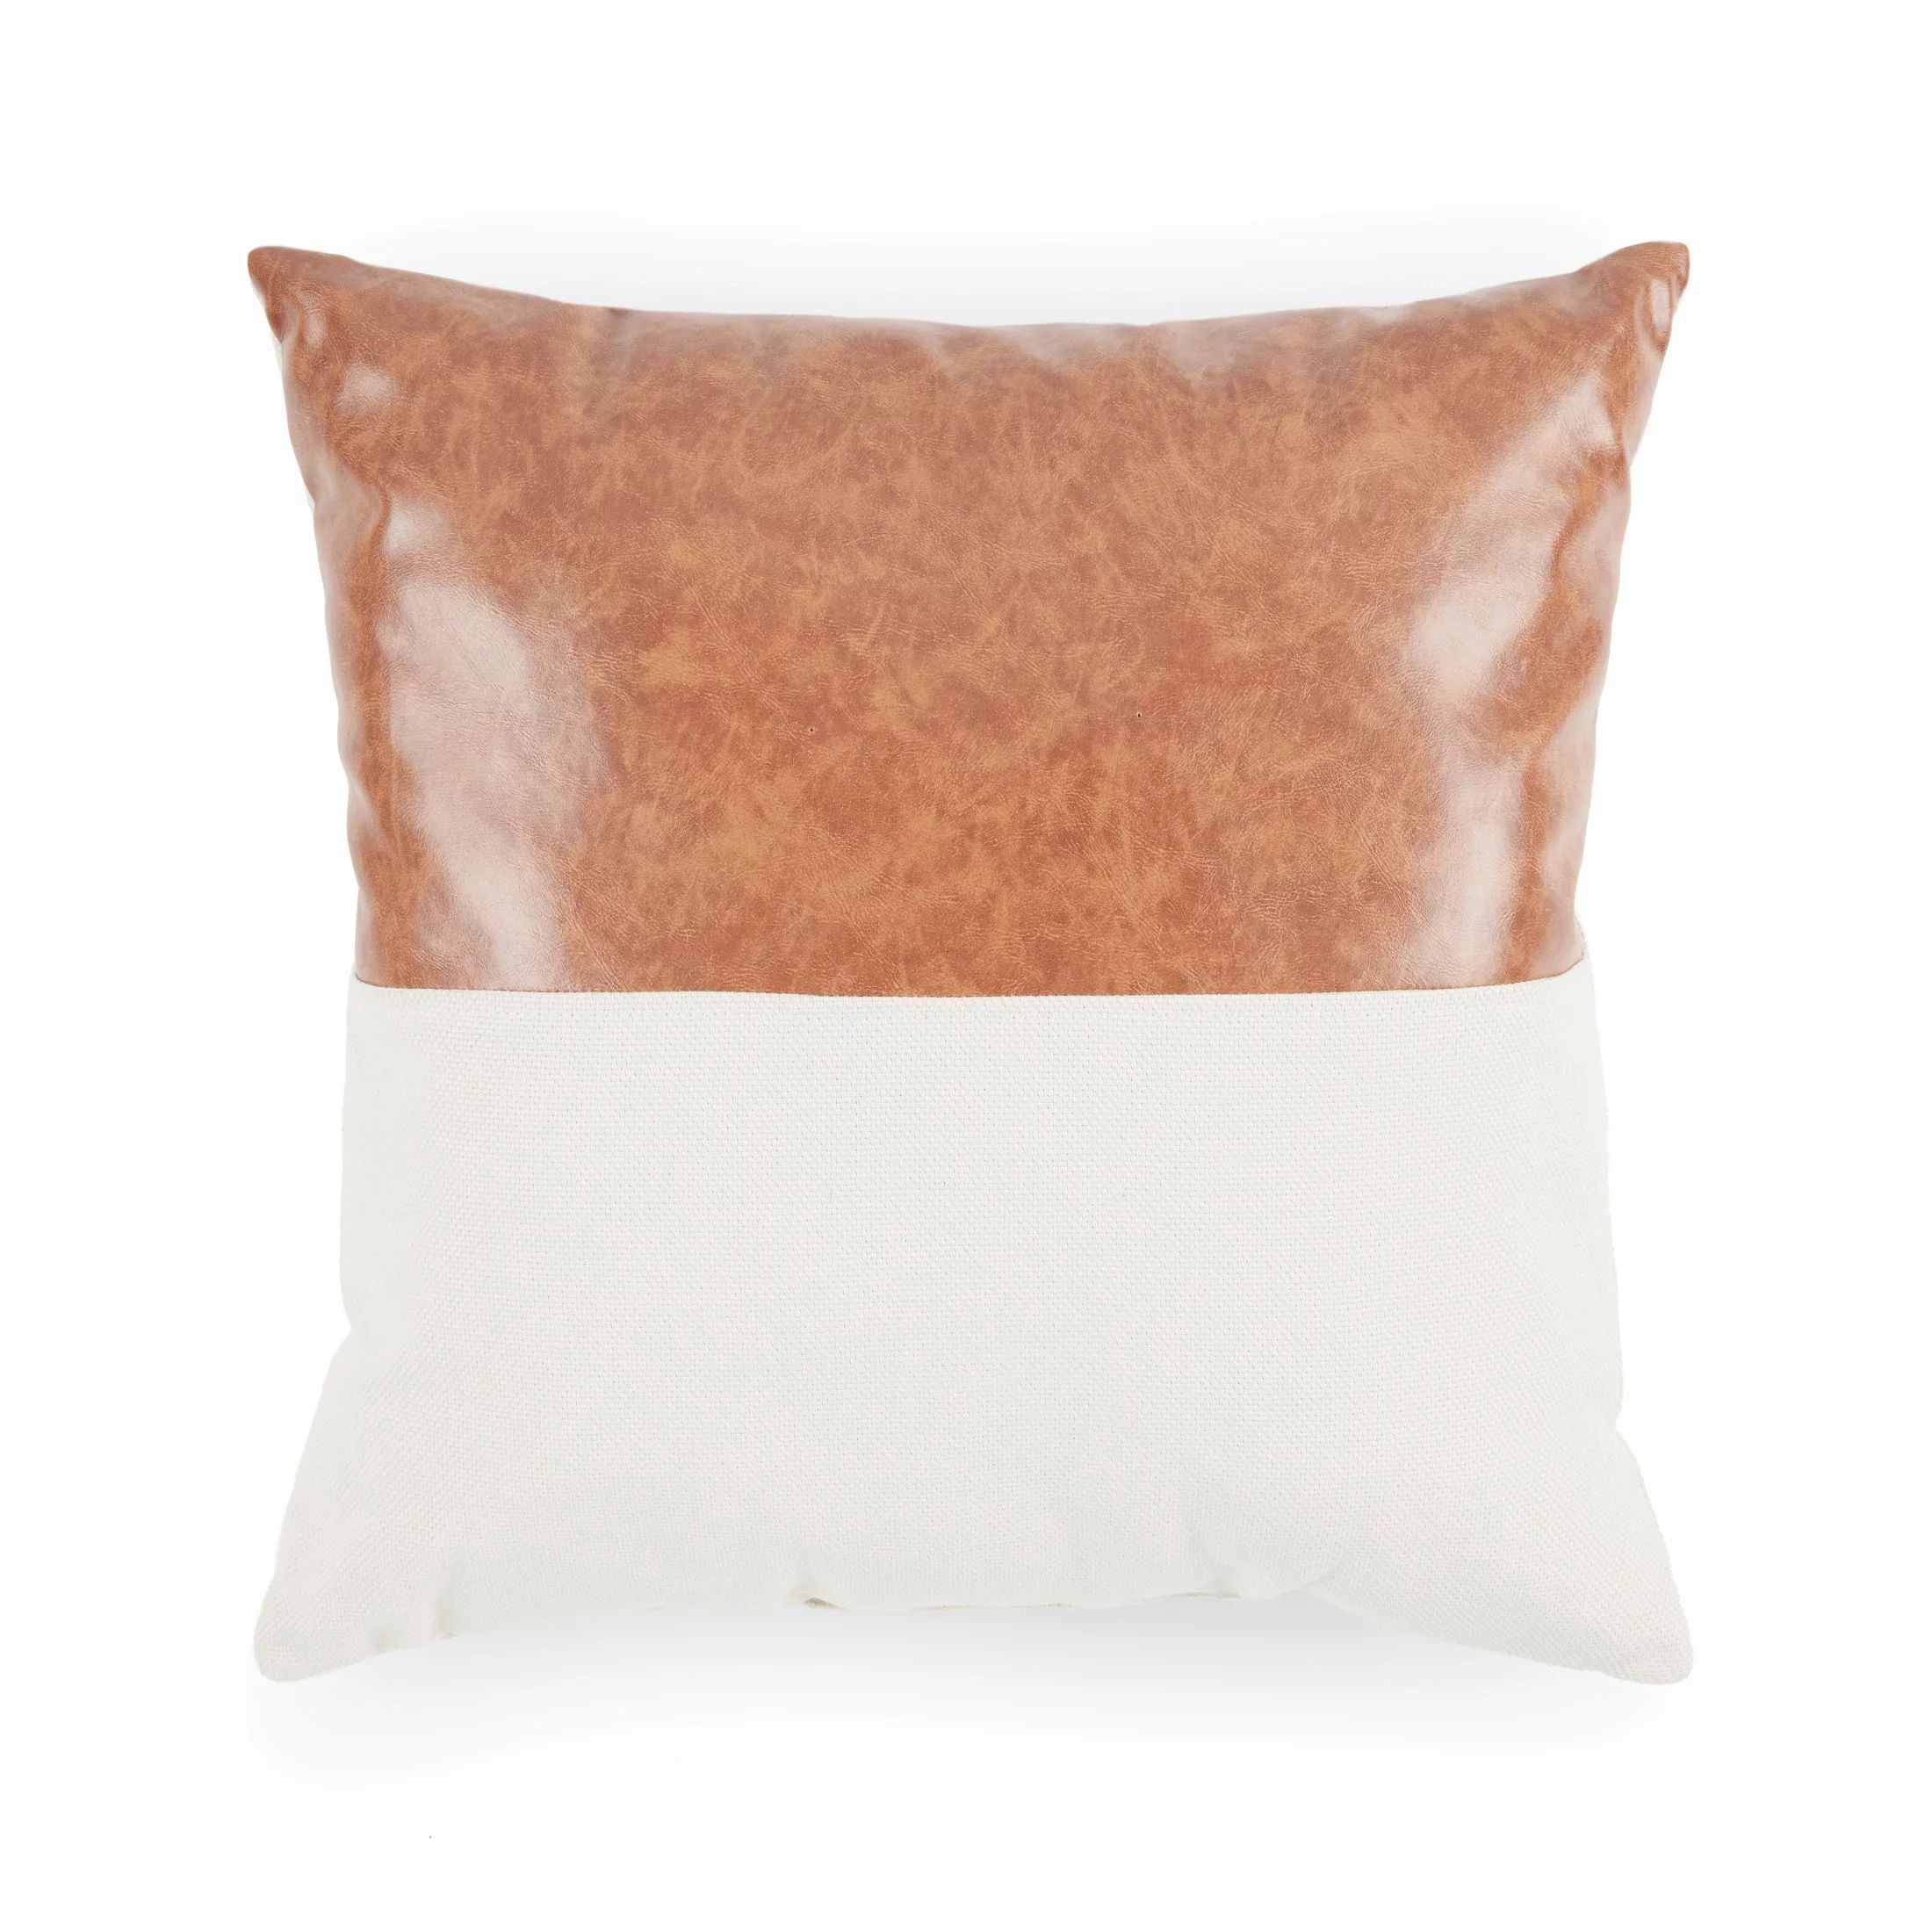 Wanda June Home Faux Leather and Ivory Pillow, Multi-color, 20"x20", 1 Piece, by Miranda Lambert ... | Walmart (US)